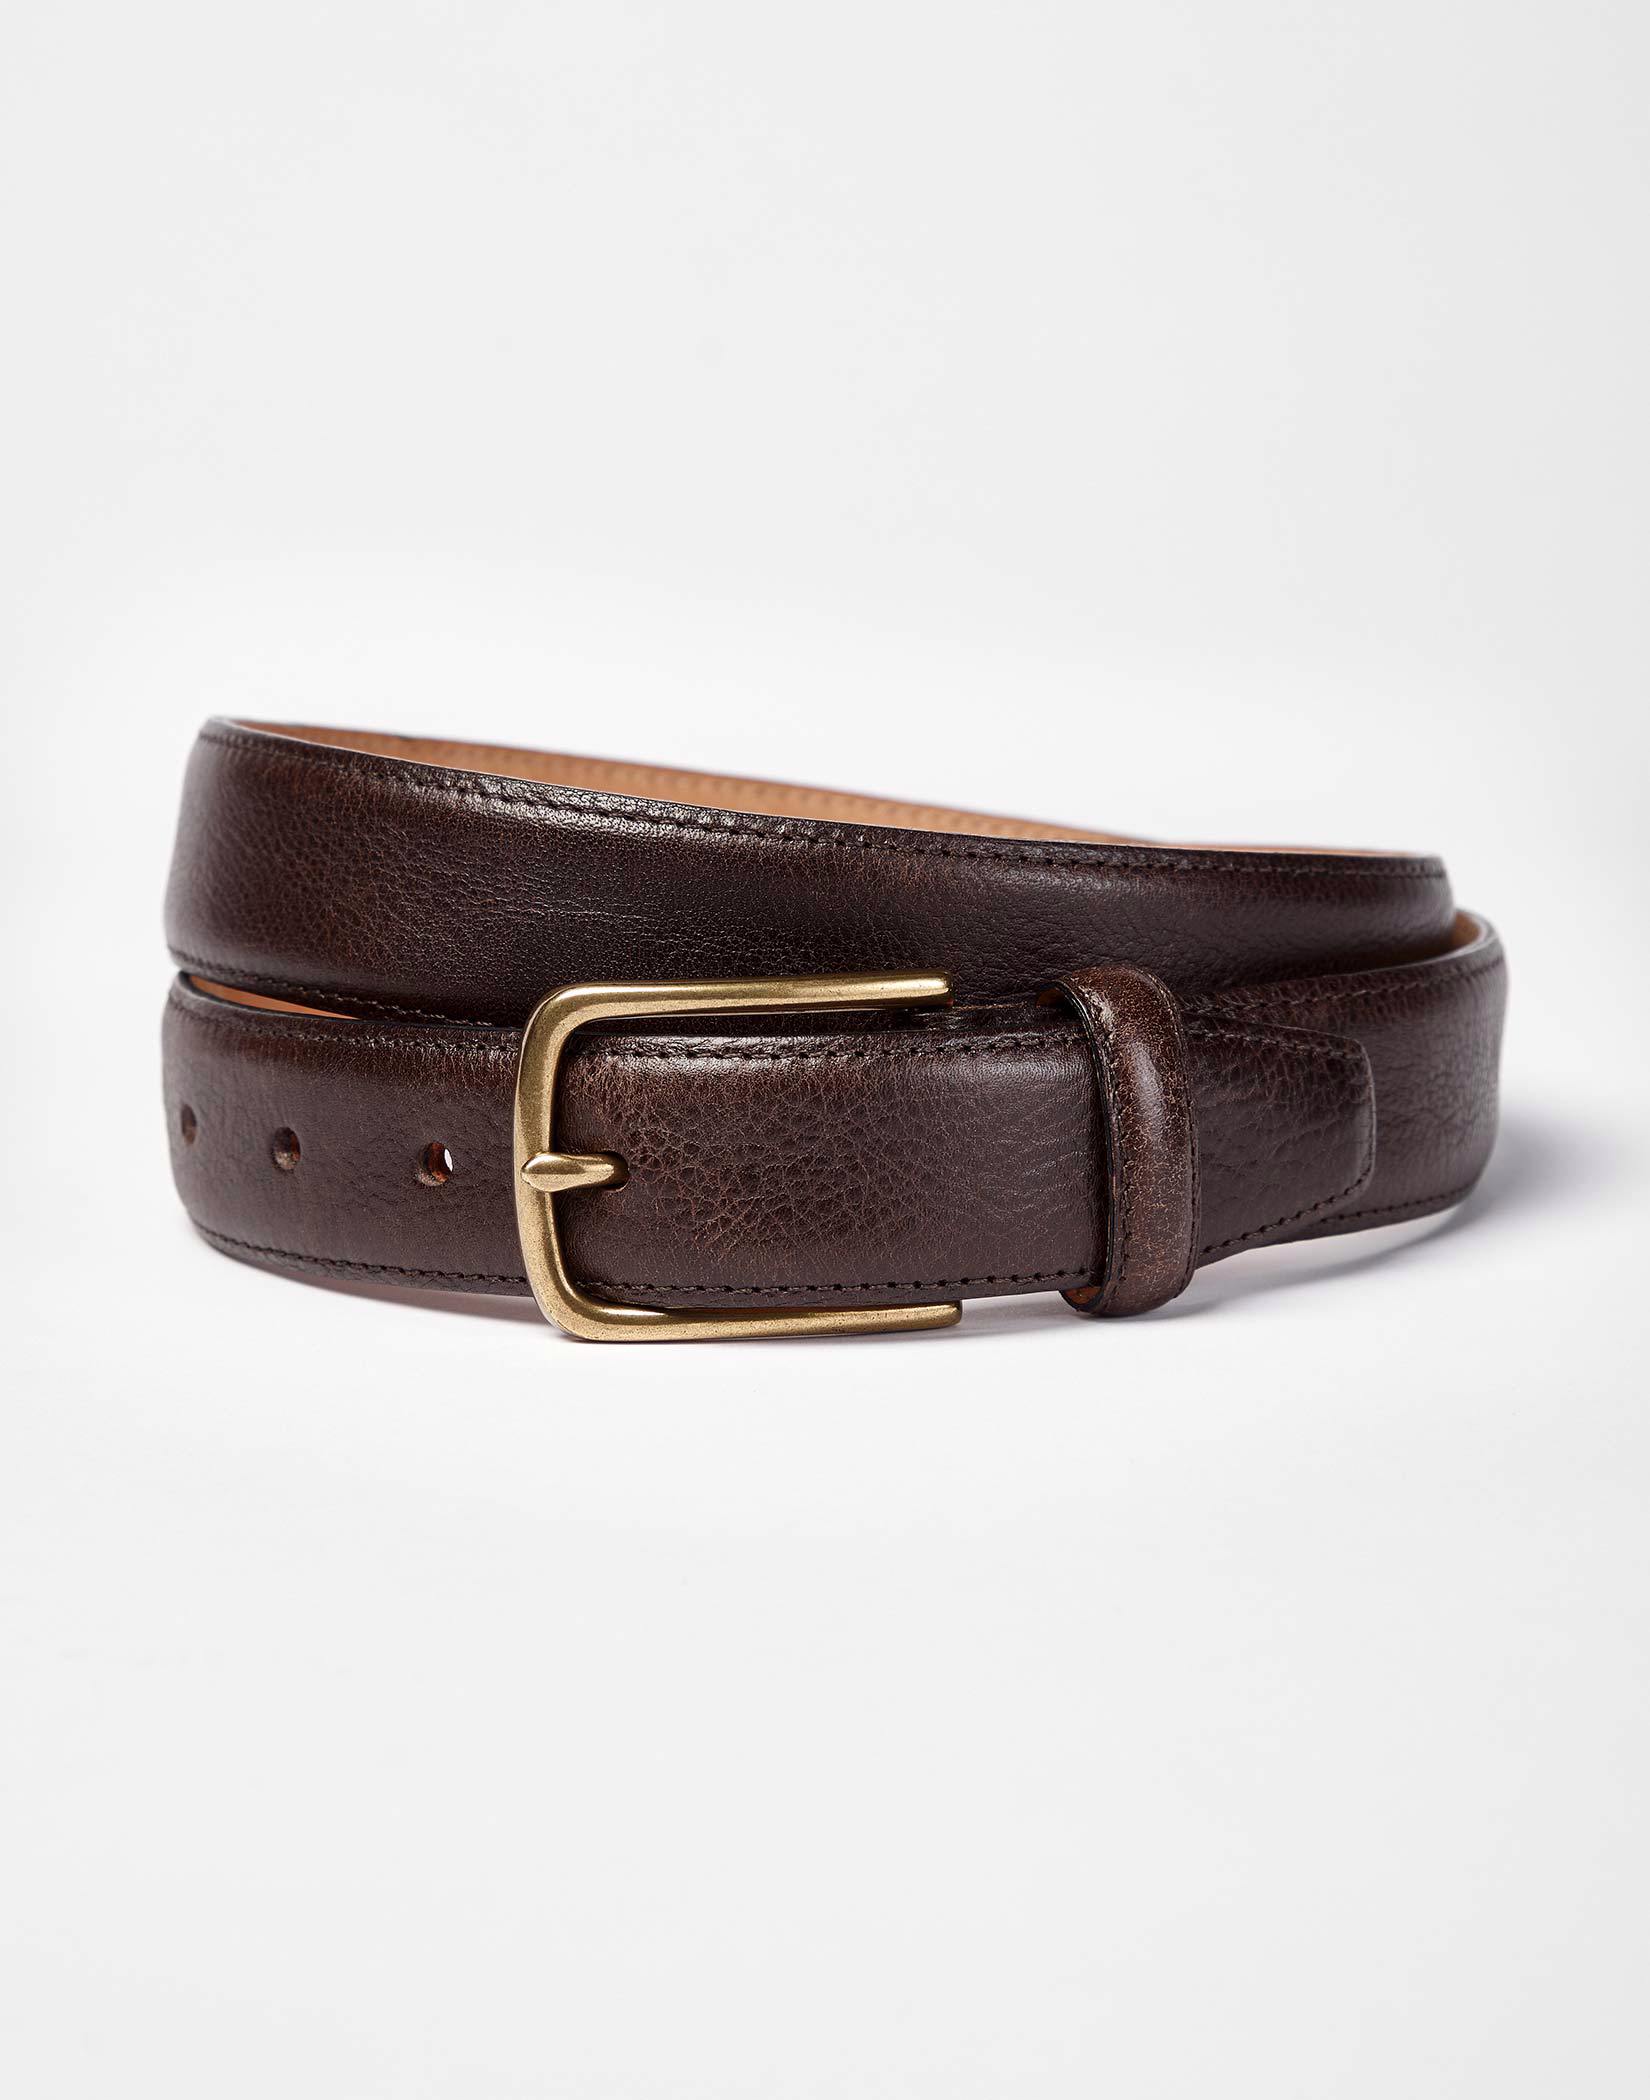 Plus Size Belts for Men, XL Men's Full Grain Leather Belt